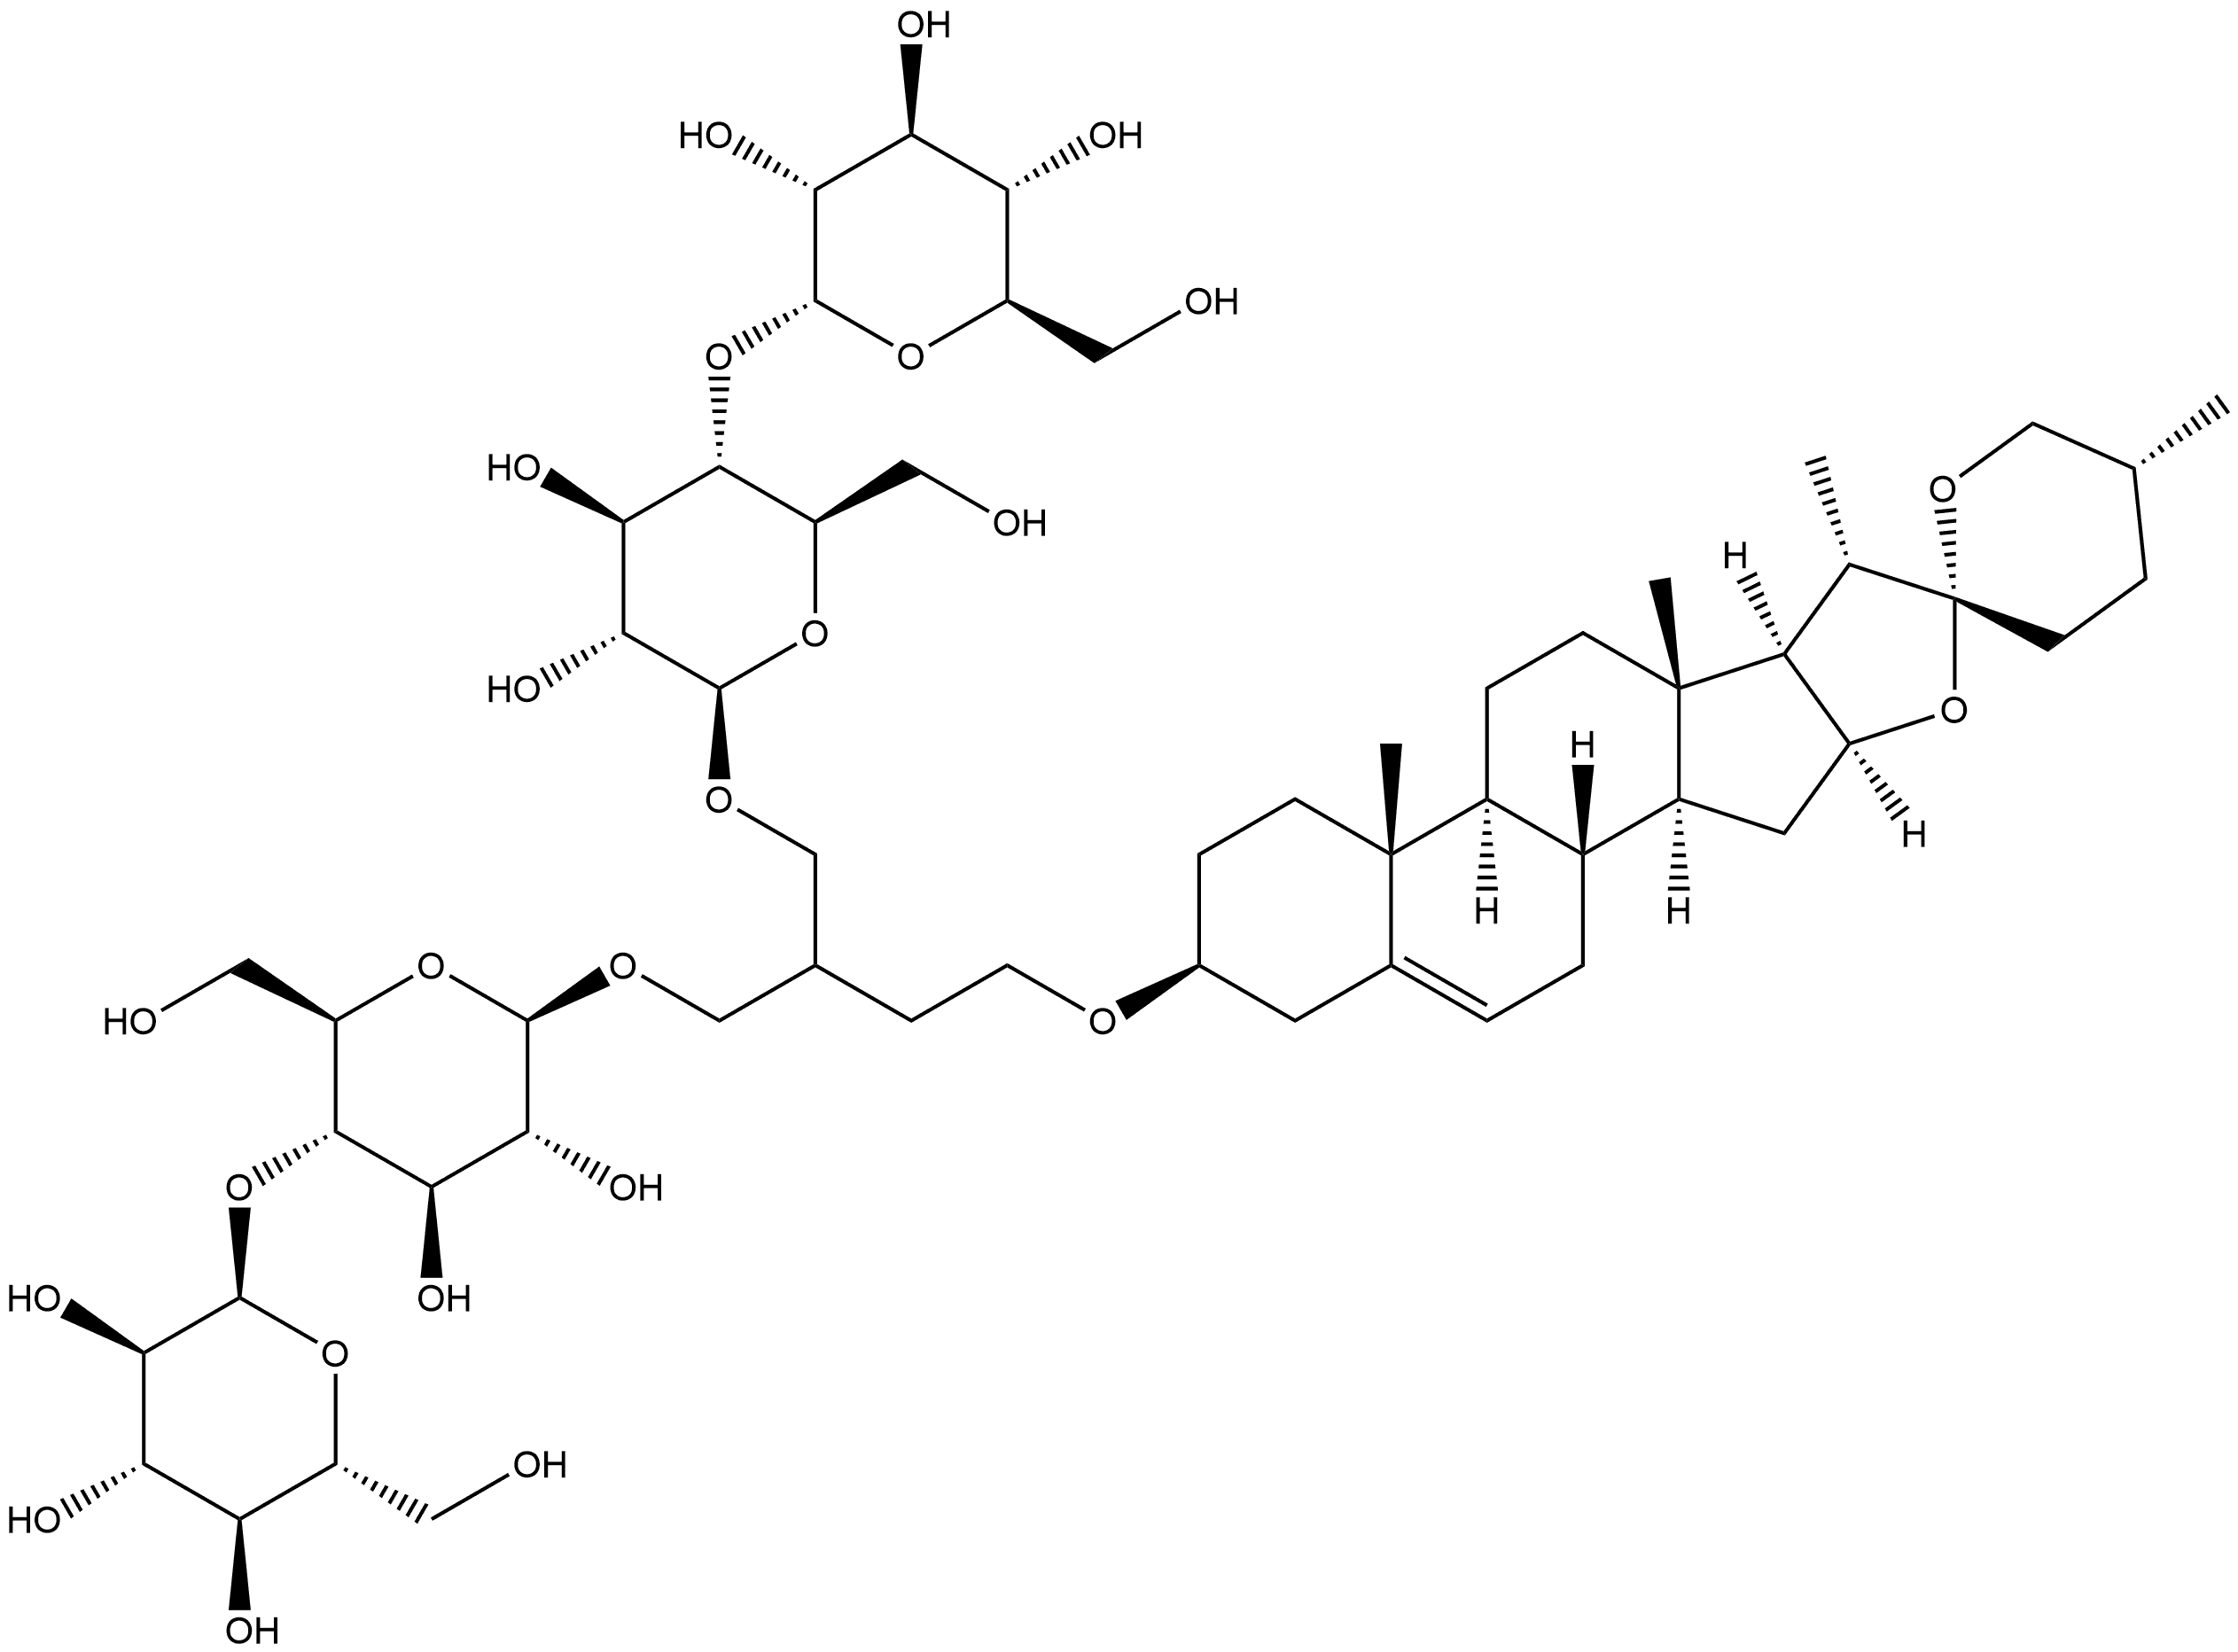 ANTI-GALECTIN-7 Structure